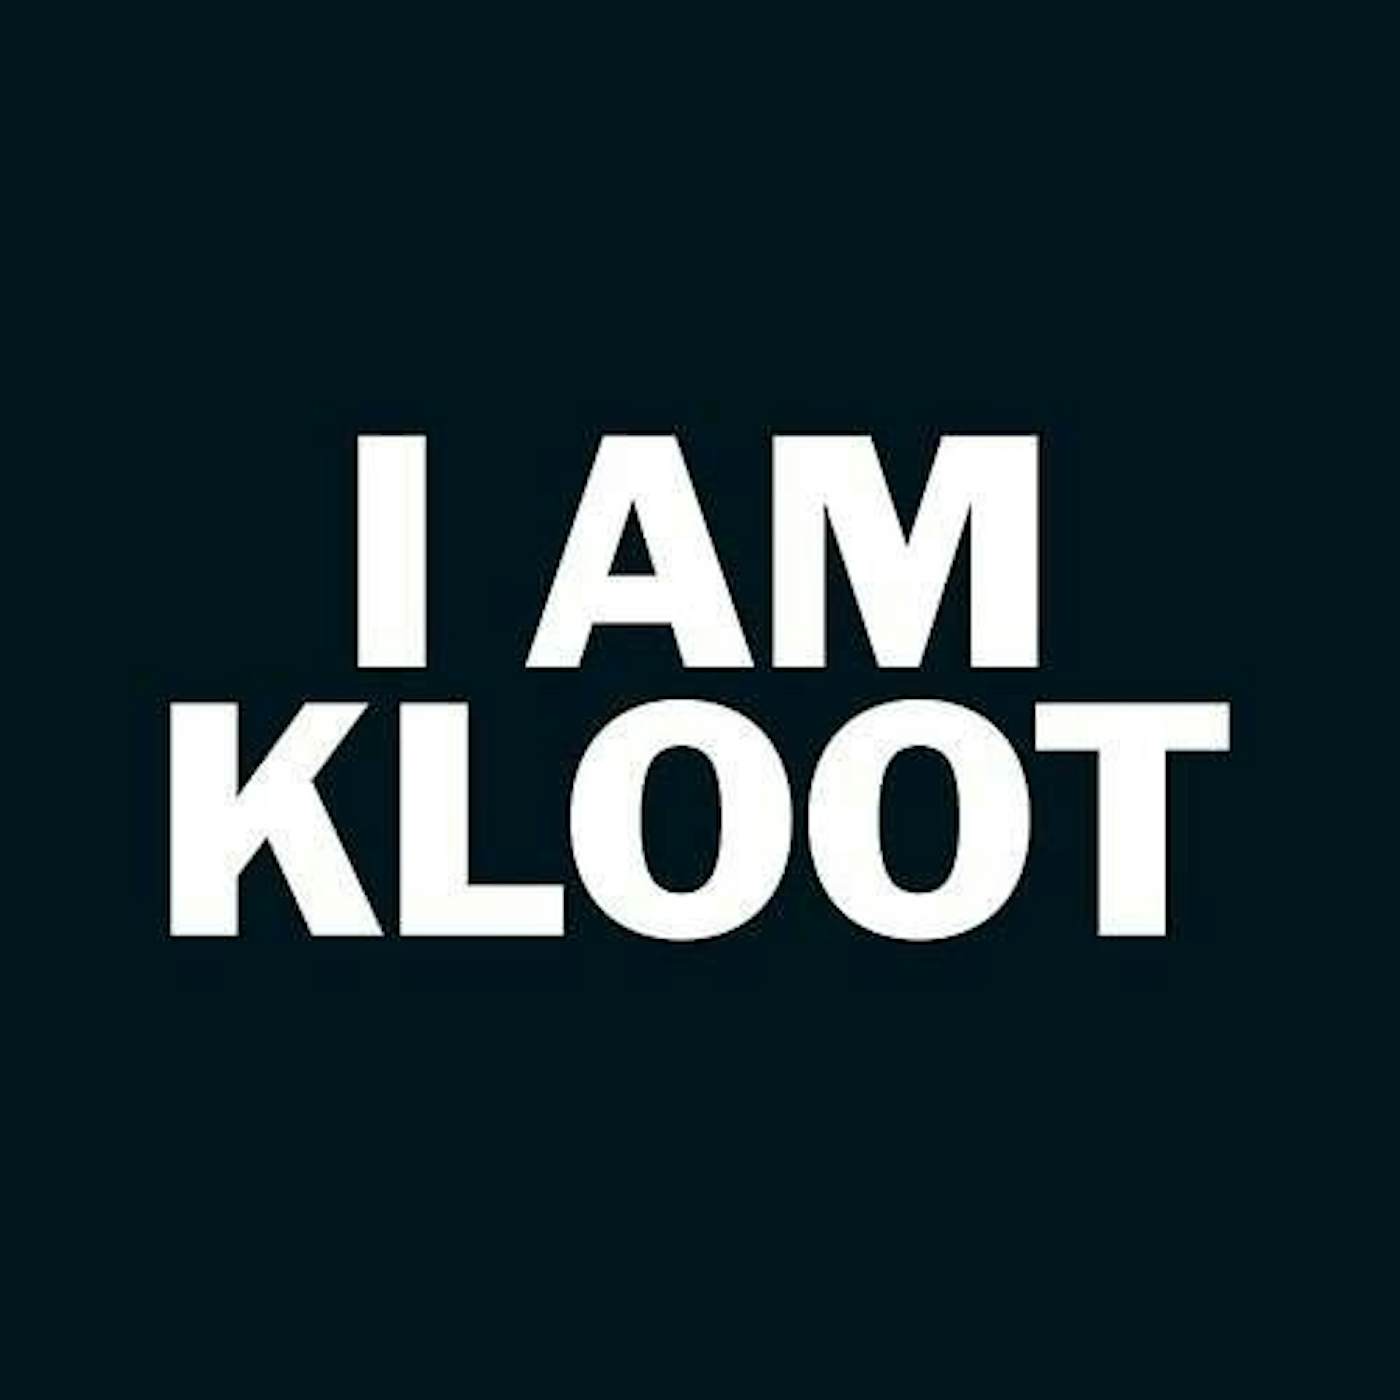 I Am Kloot Vinyl Record